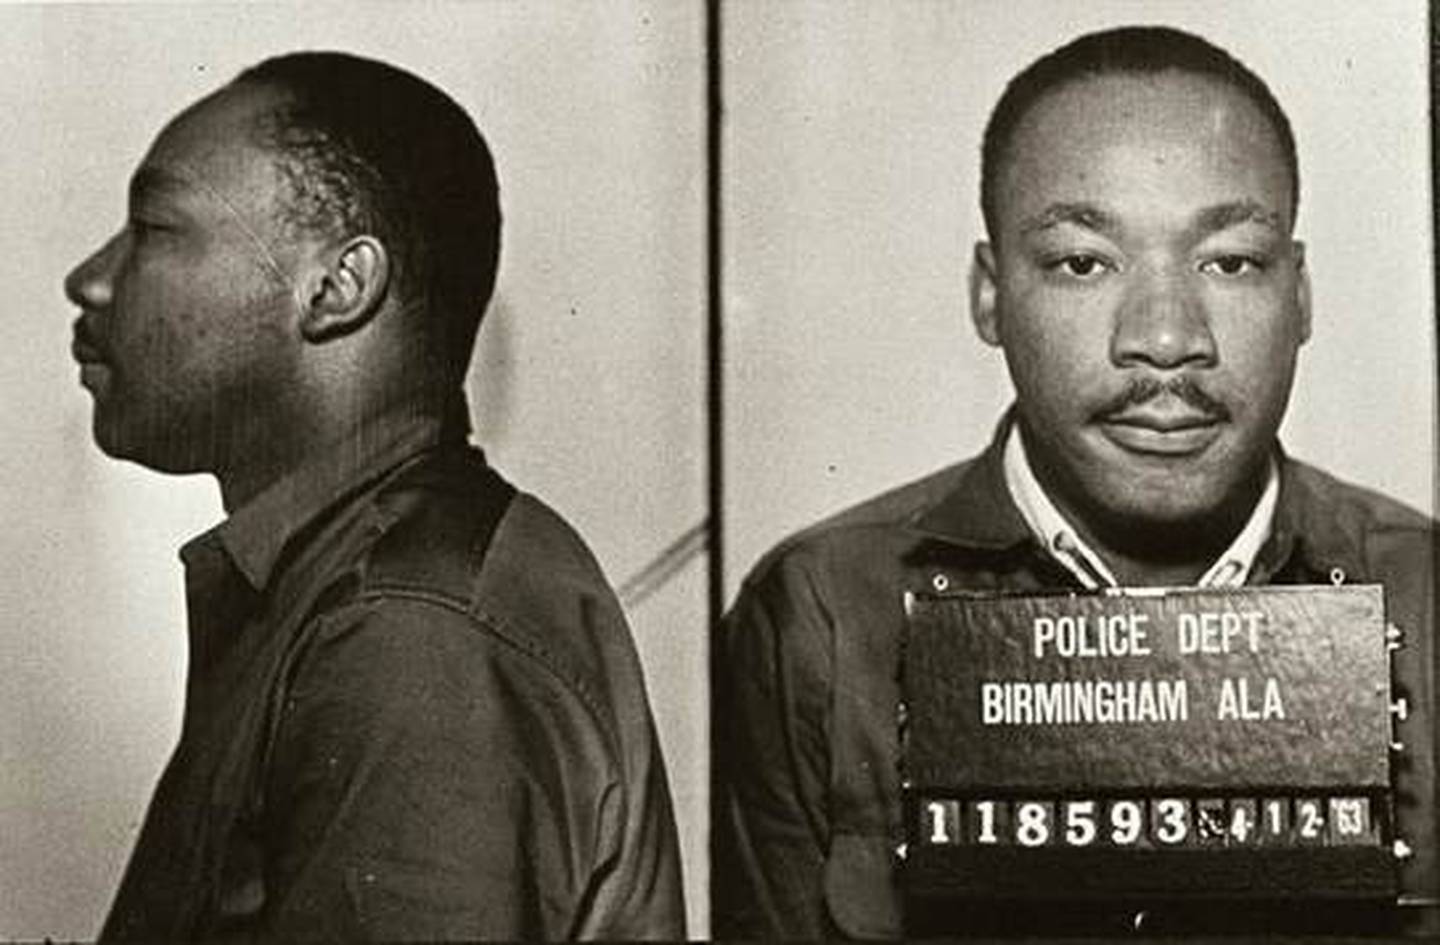 Dr. King's 1963 mugshot after arrest for protesting the treatment of black Americans in Birmingham, Alabama.